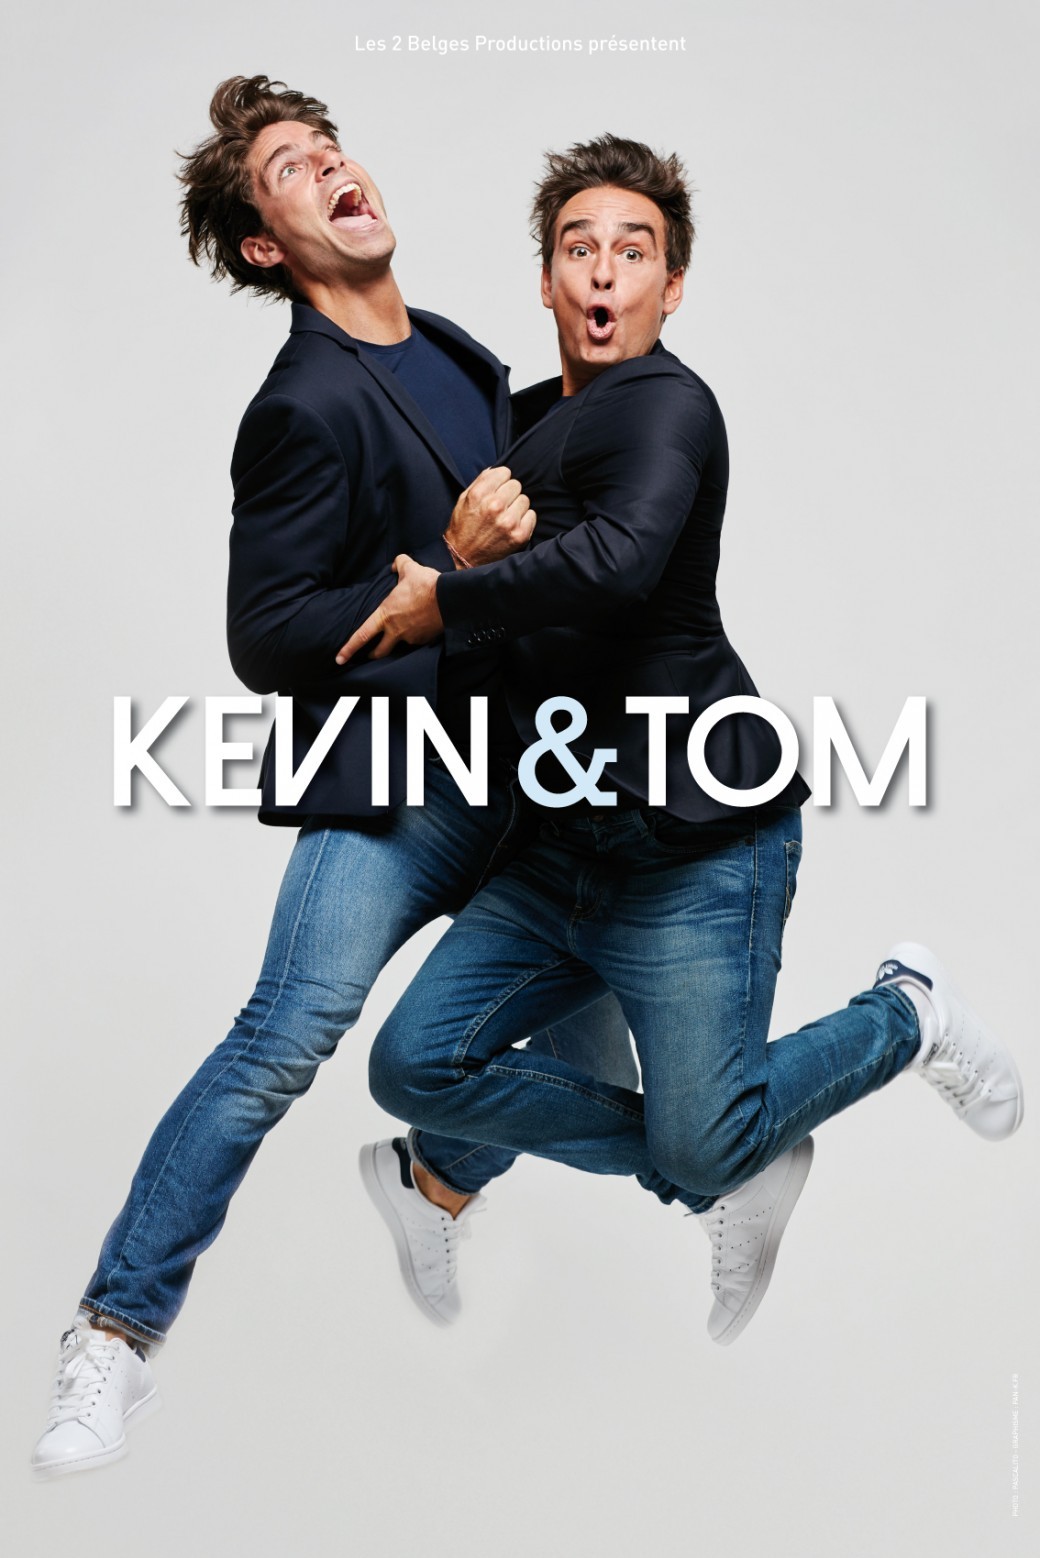 Kevin et Tom dans "Double bug"